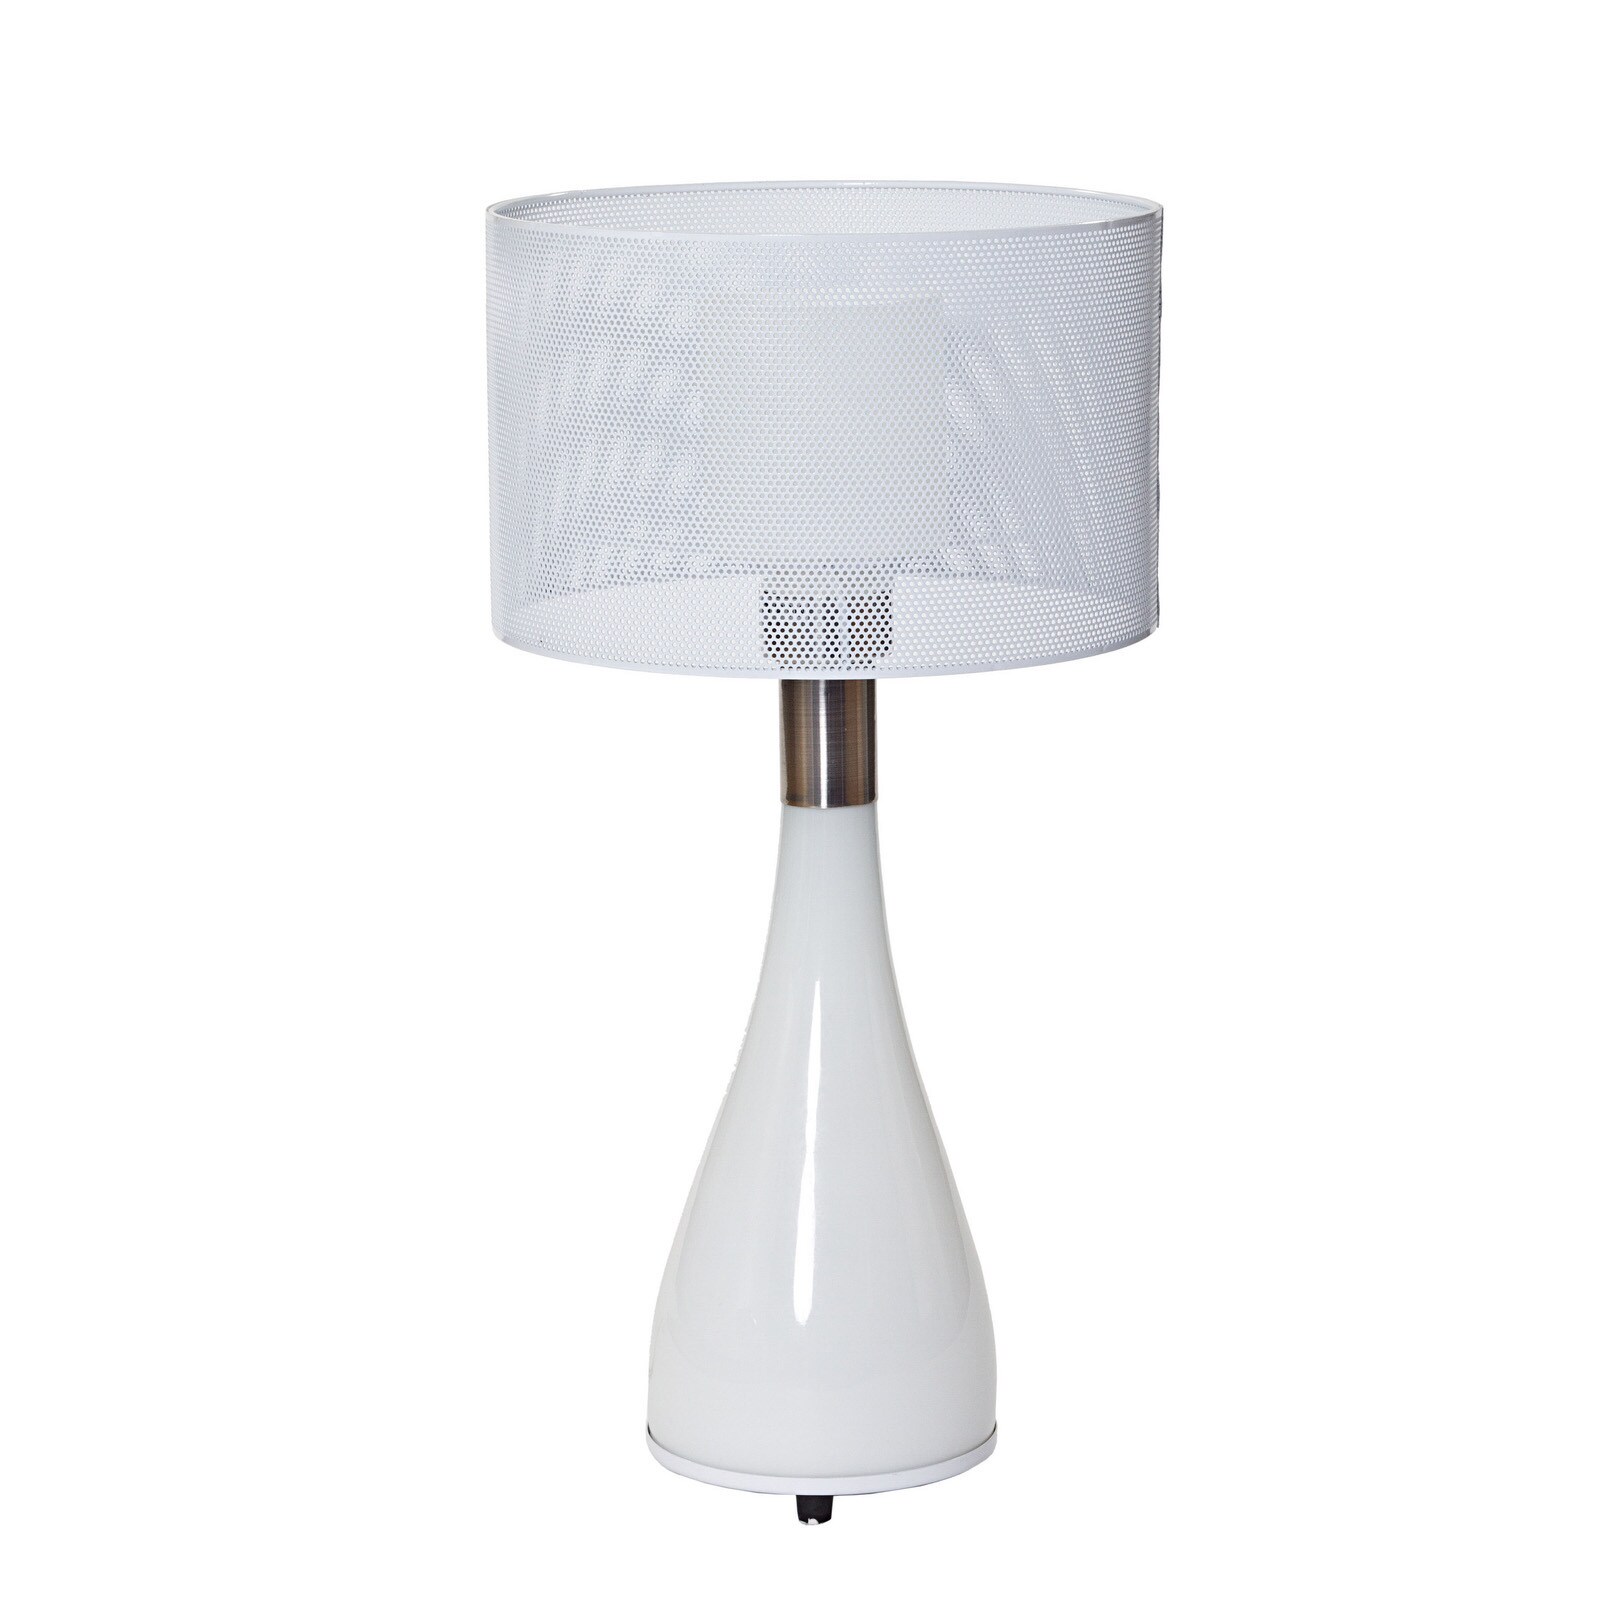 Pearly White Mushroom Lamp